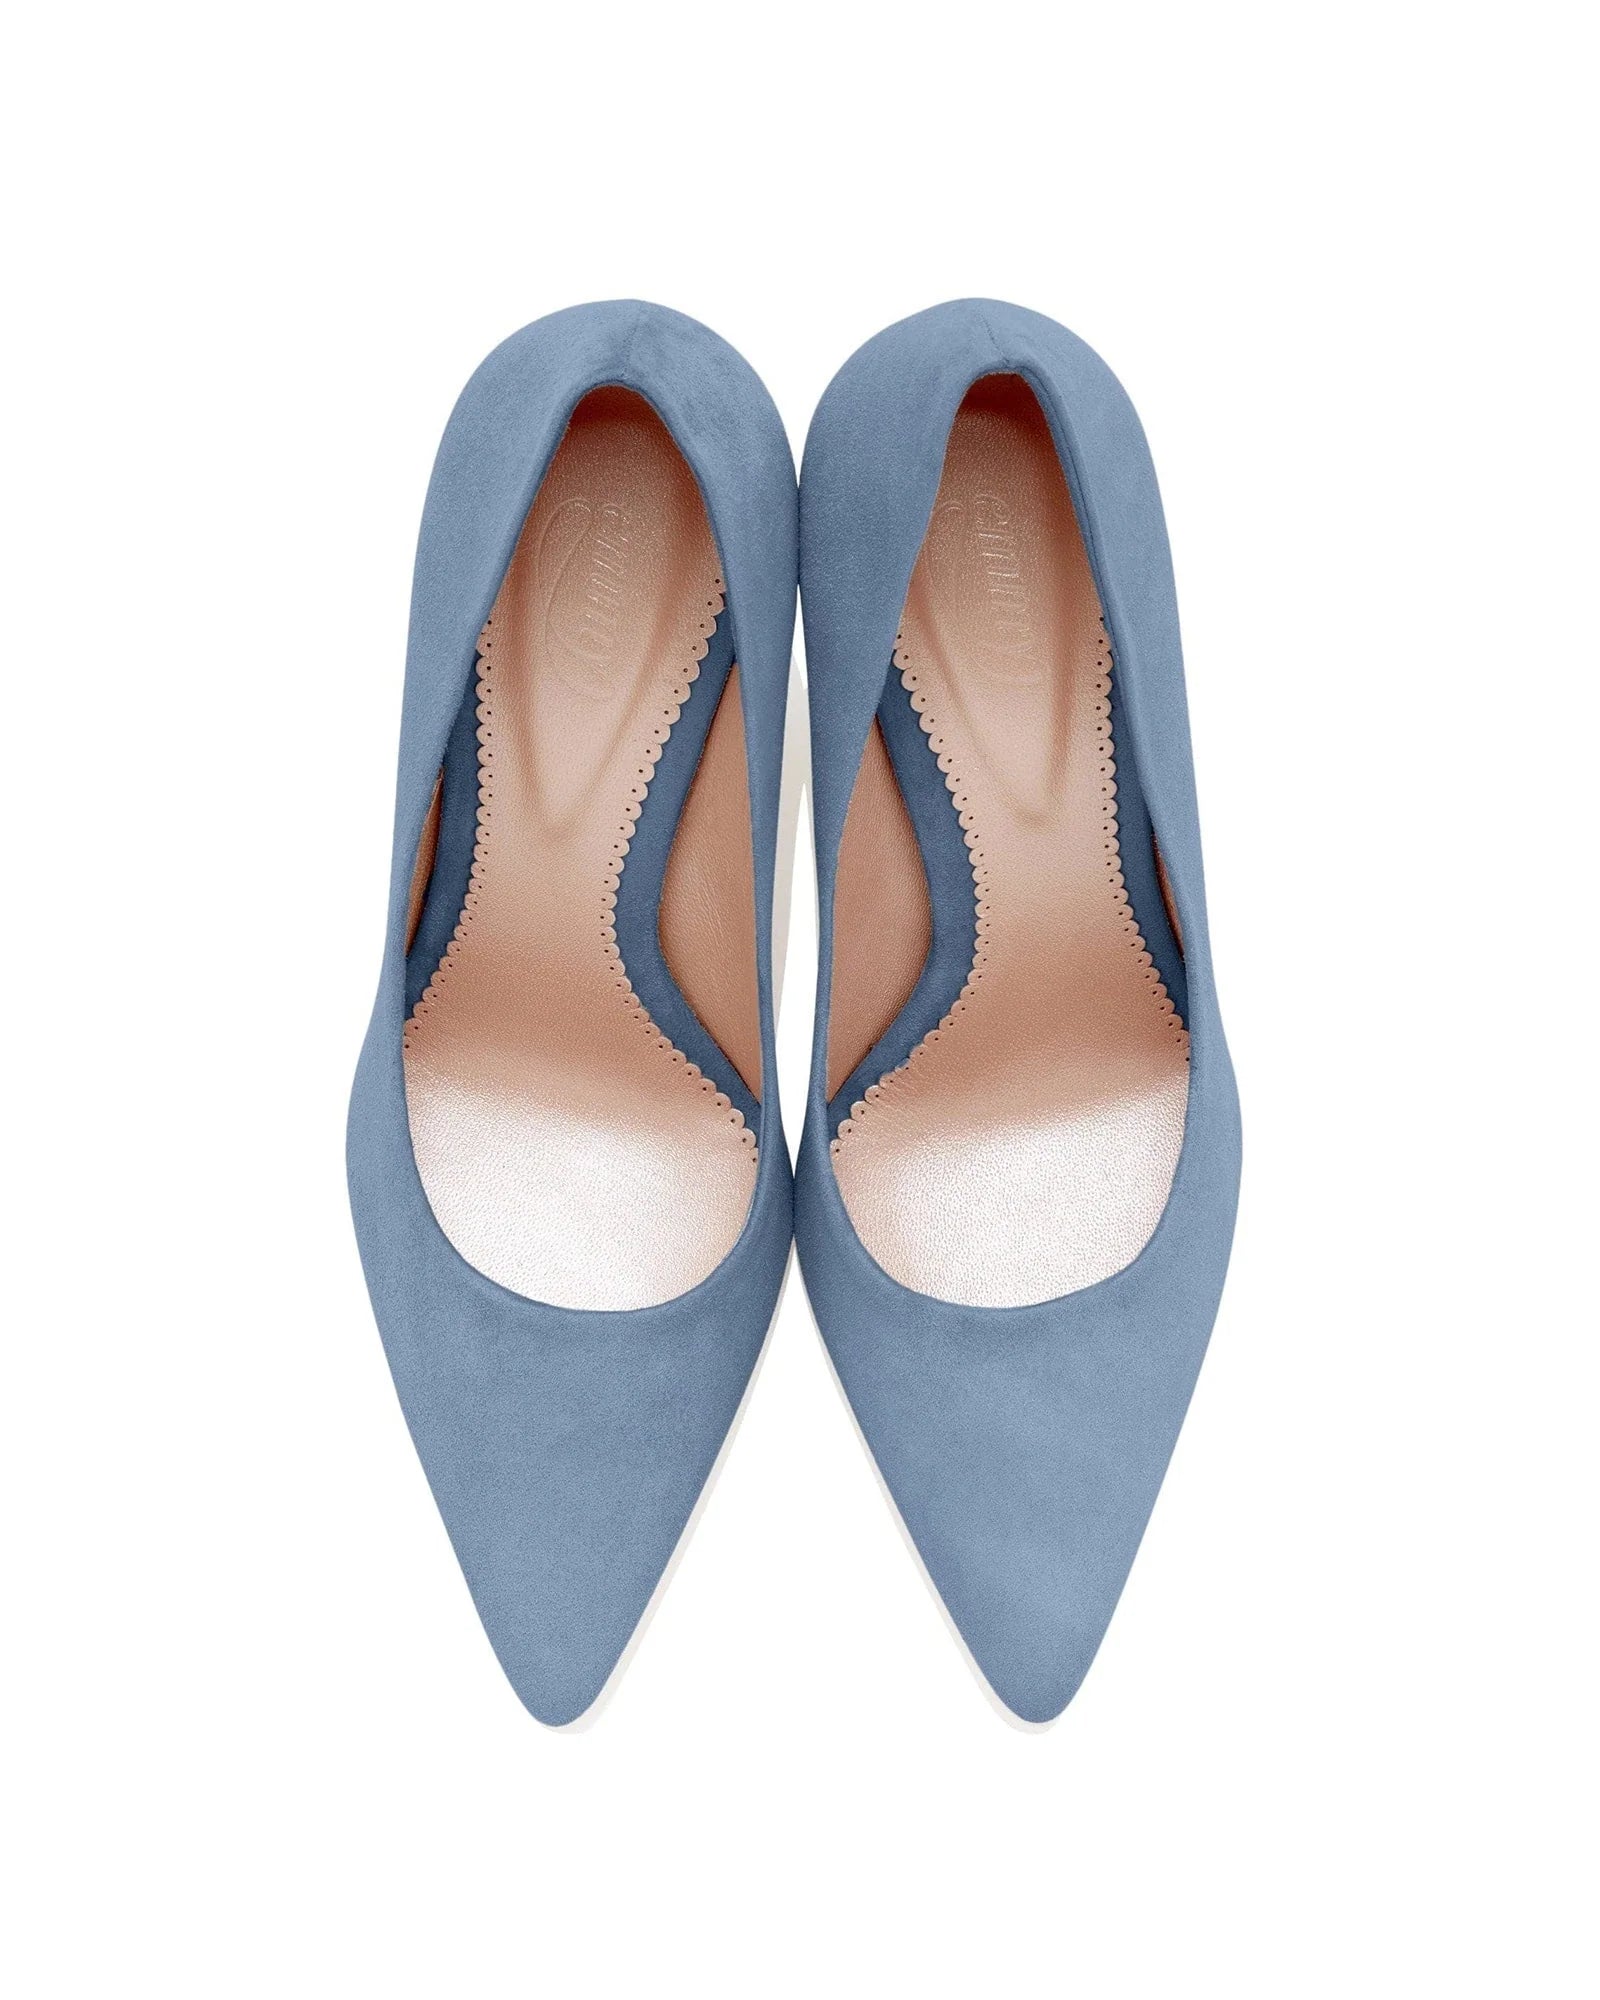 Claudia Mid Heel Fashion Shoe Blue Pointed Court Shoe  image